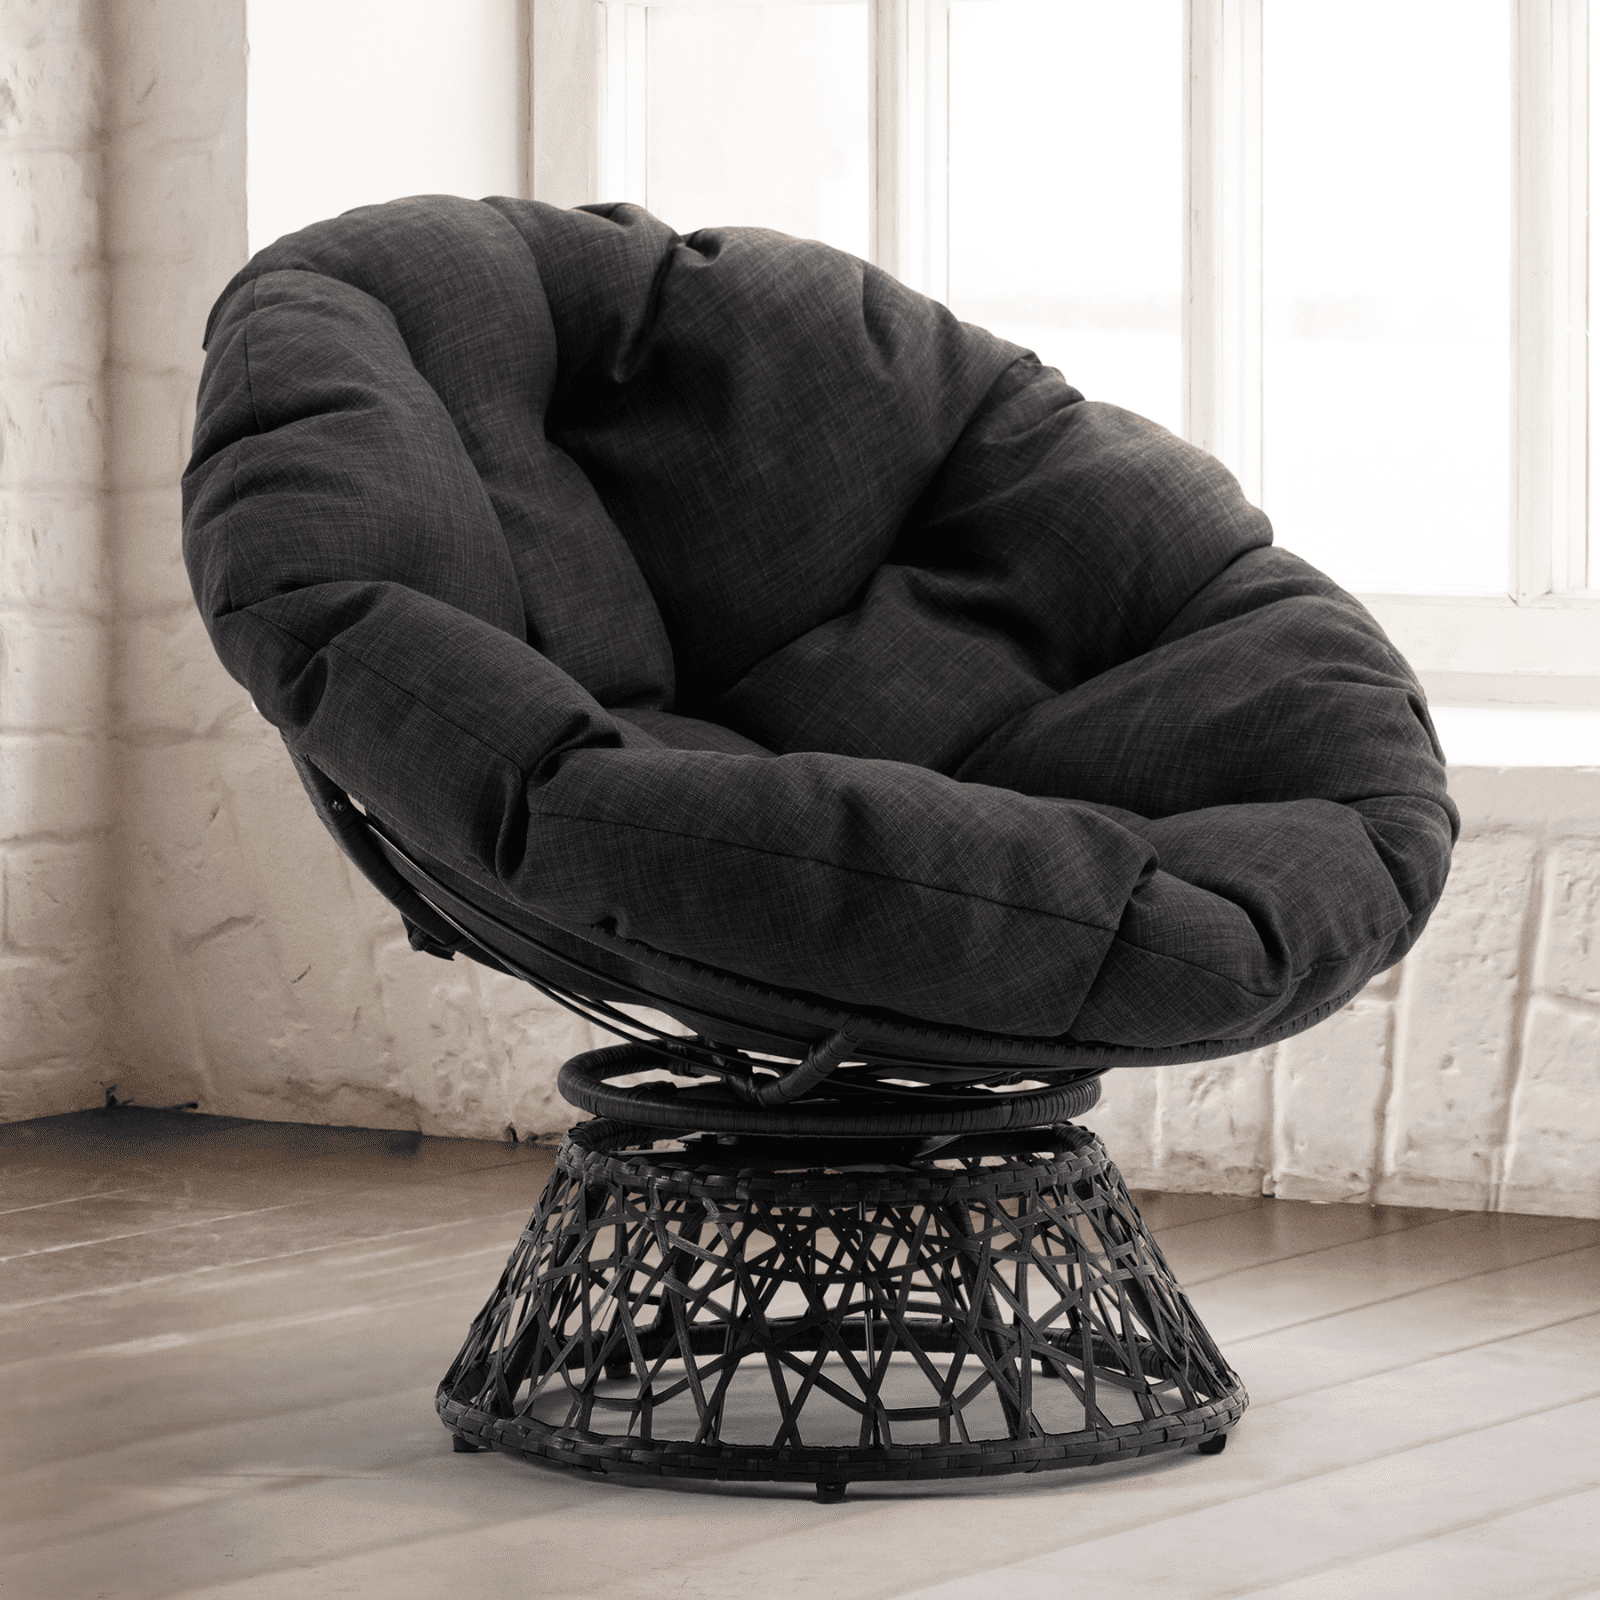 Bme 360 Swivel Comfy Papasan Chair with Fabric Cushion, Sturdy Metal Frame (Cream Vanilla - Black Frame)